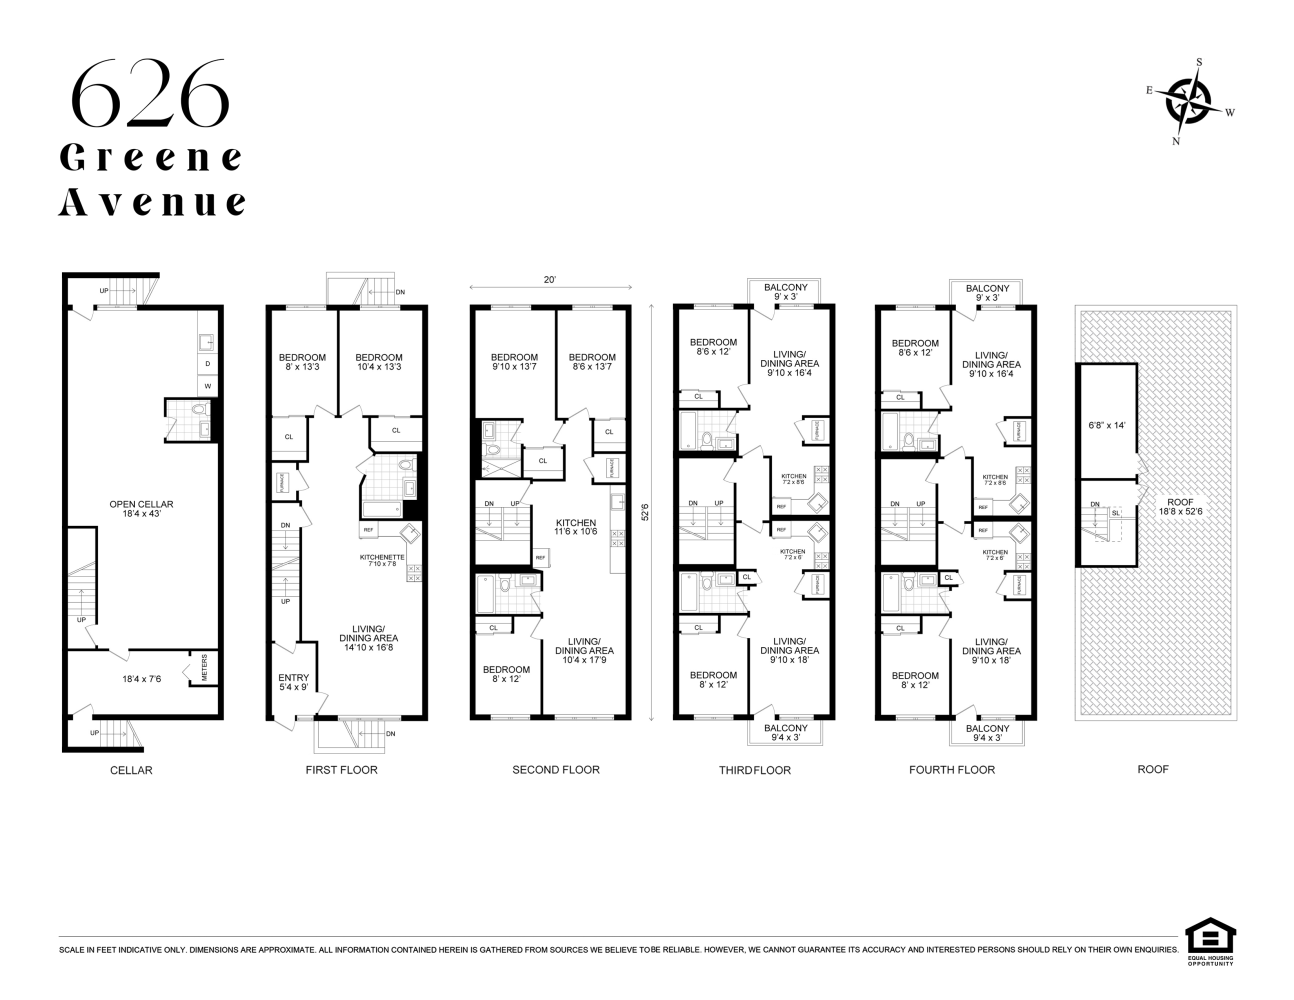 Floorplan for 626 Greene Avenue, TH